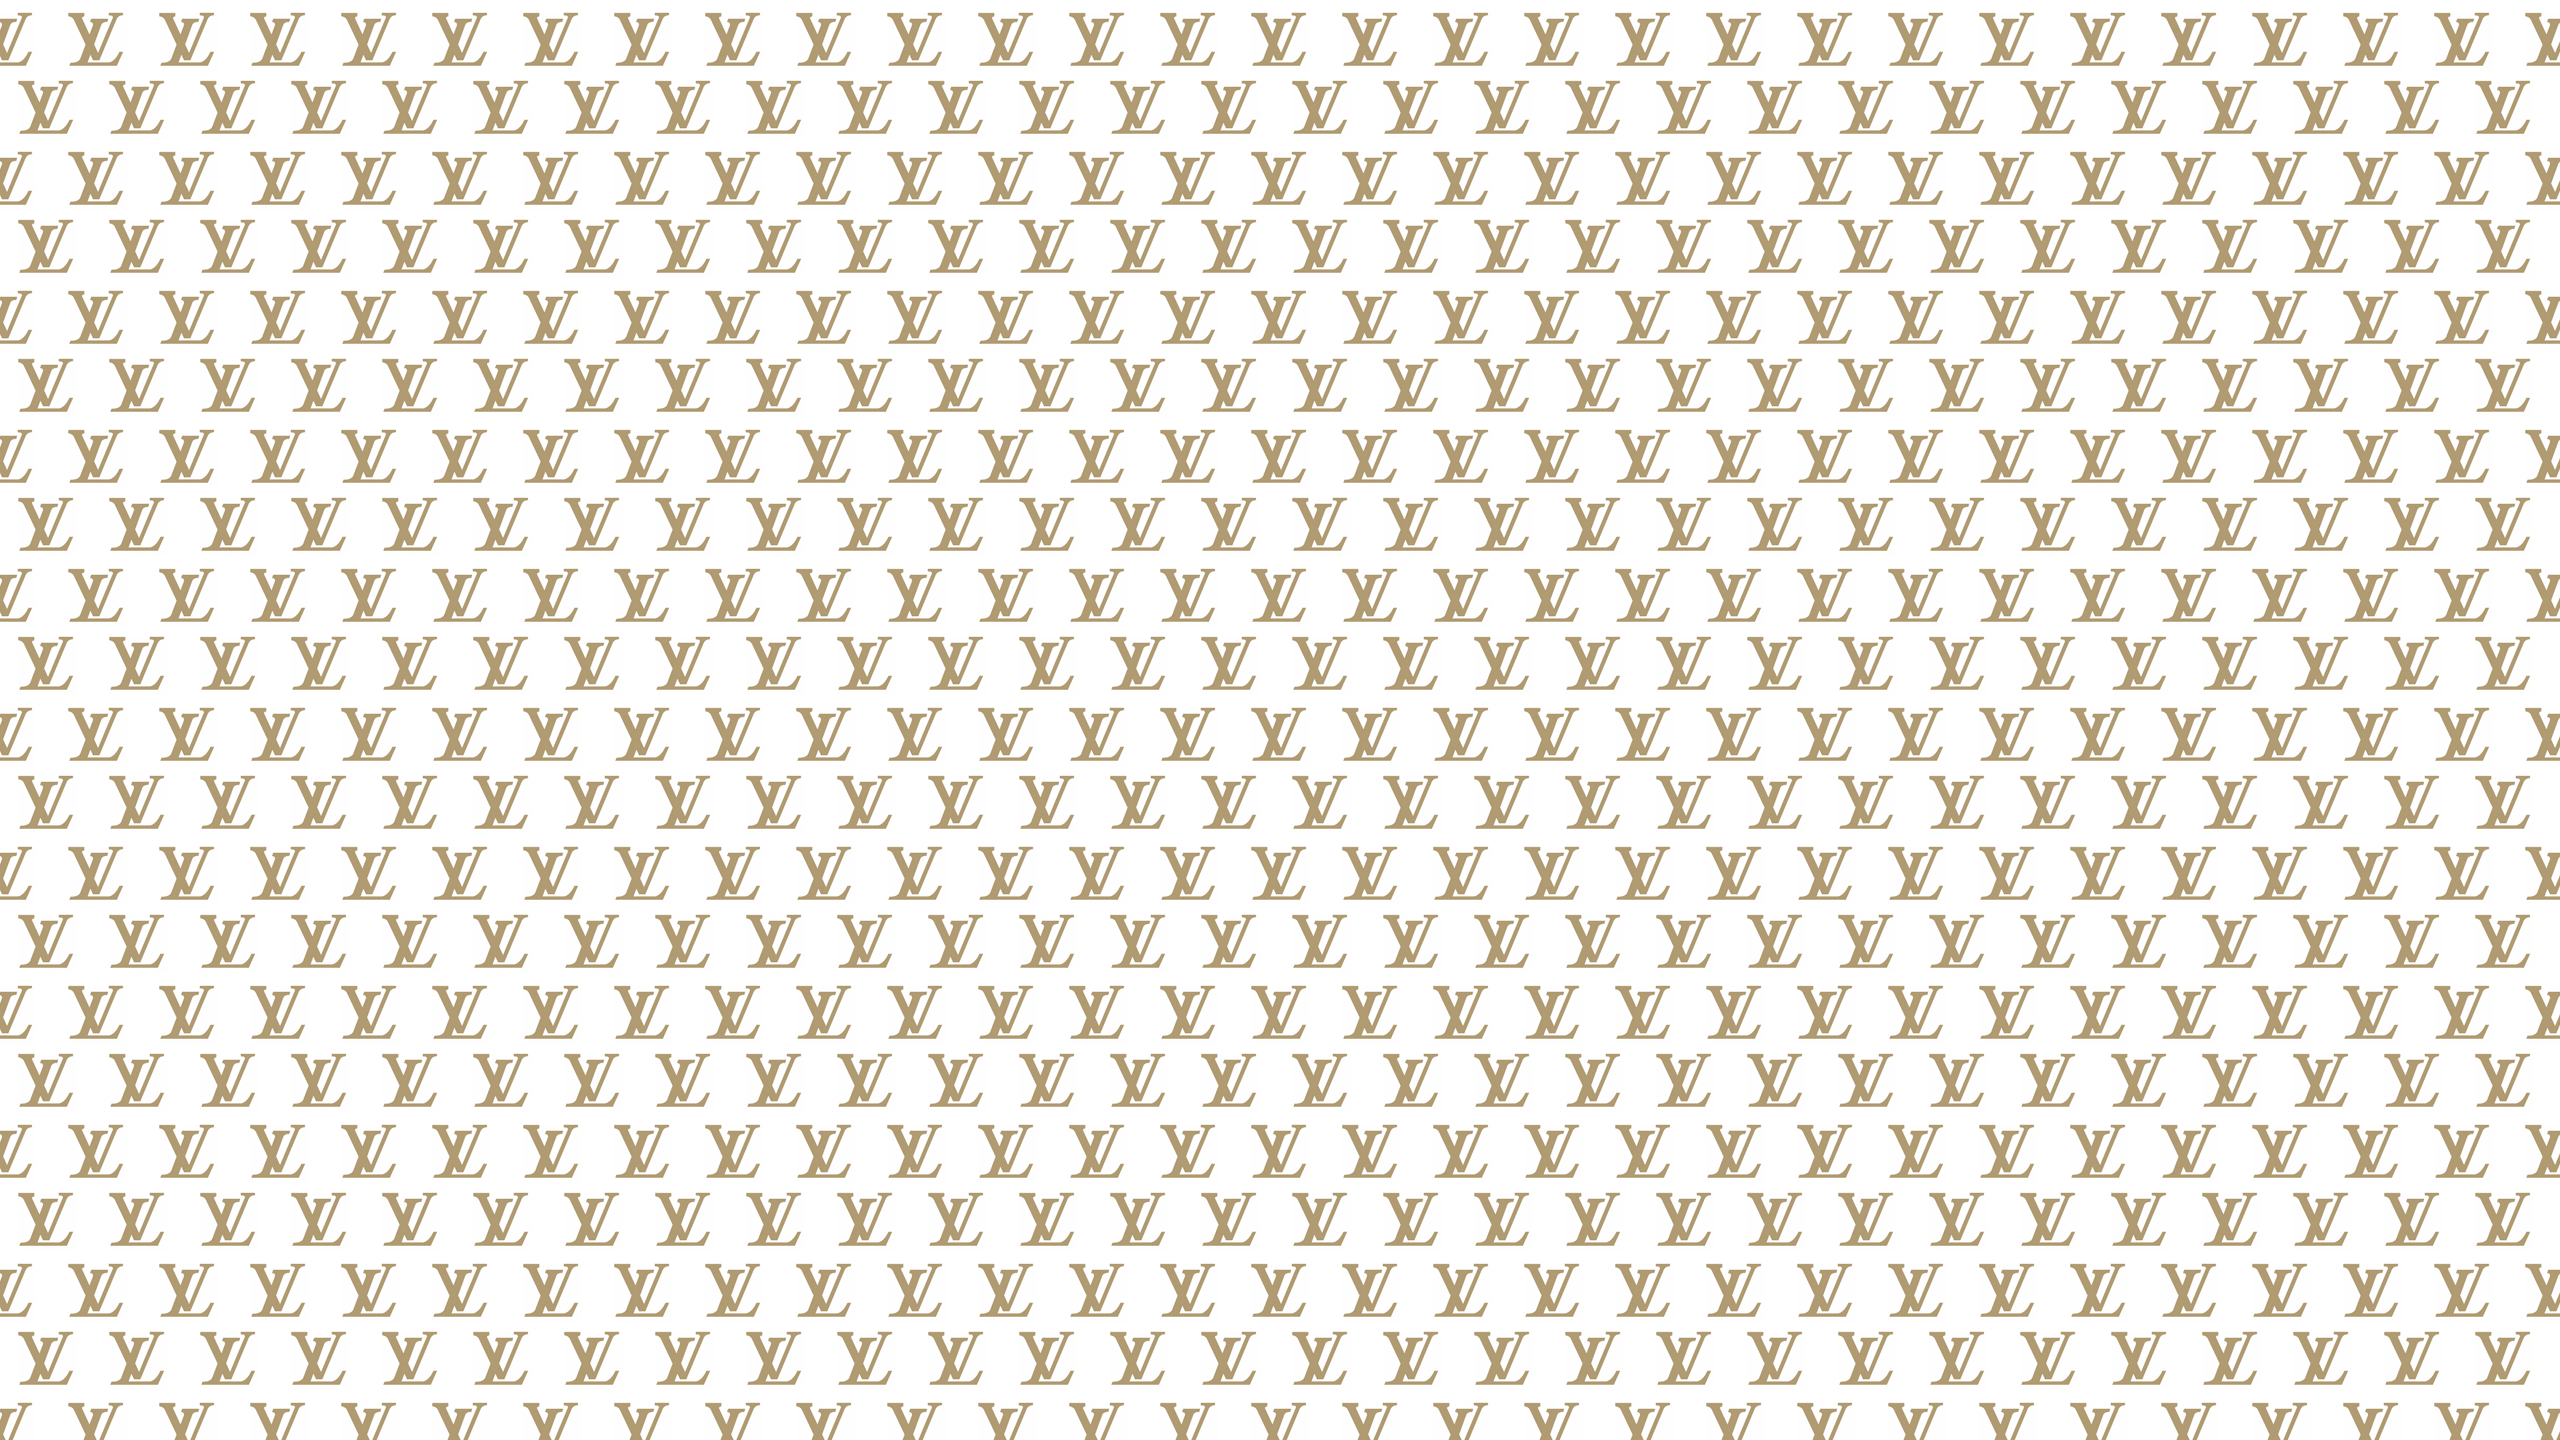 Download Hd Louis Vuitton Logo Gold - Gold Louis Vuitton Logo Png